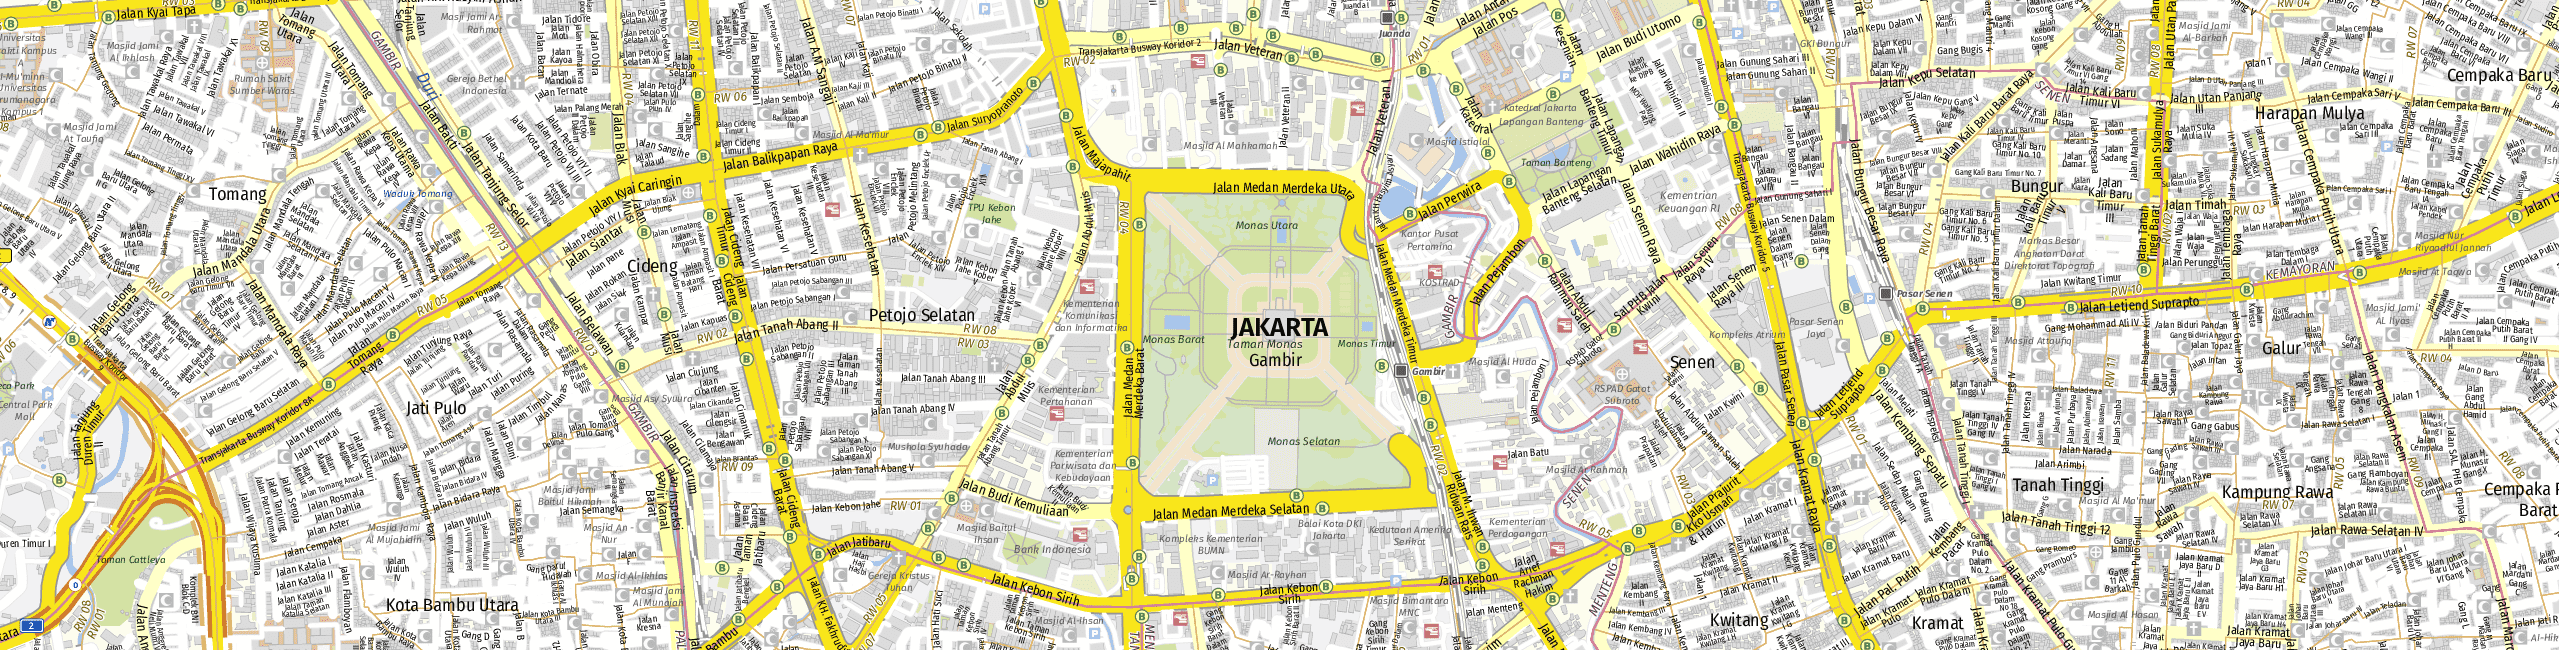 Stadtplan Jakarta zum Downloaden.